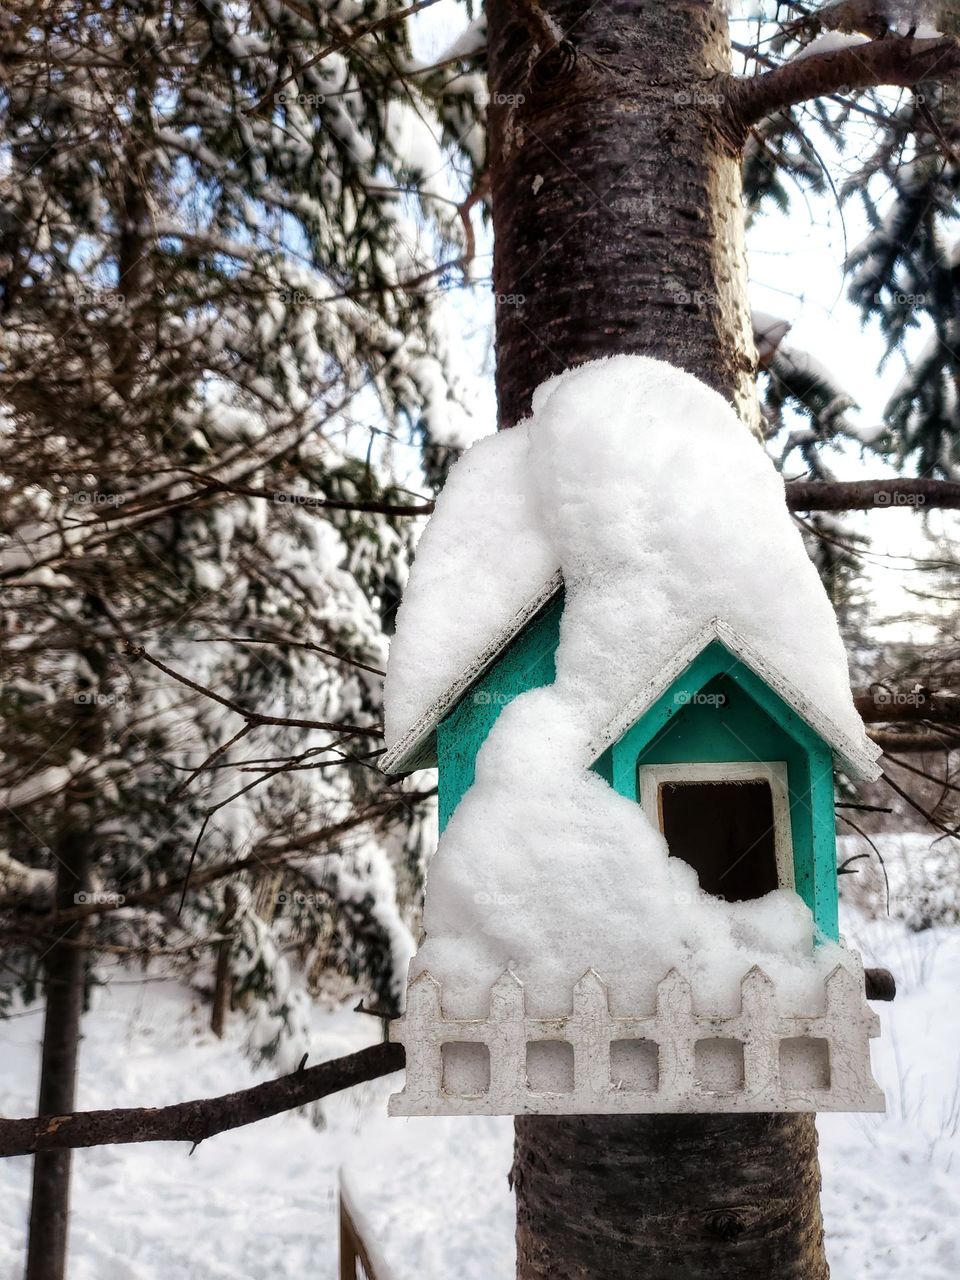 First snowfall: snow covered birdhouse.